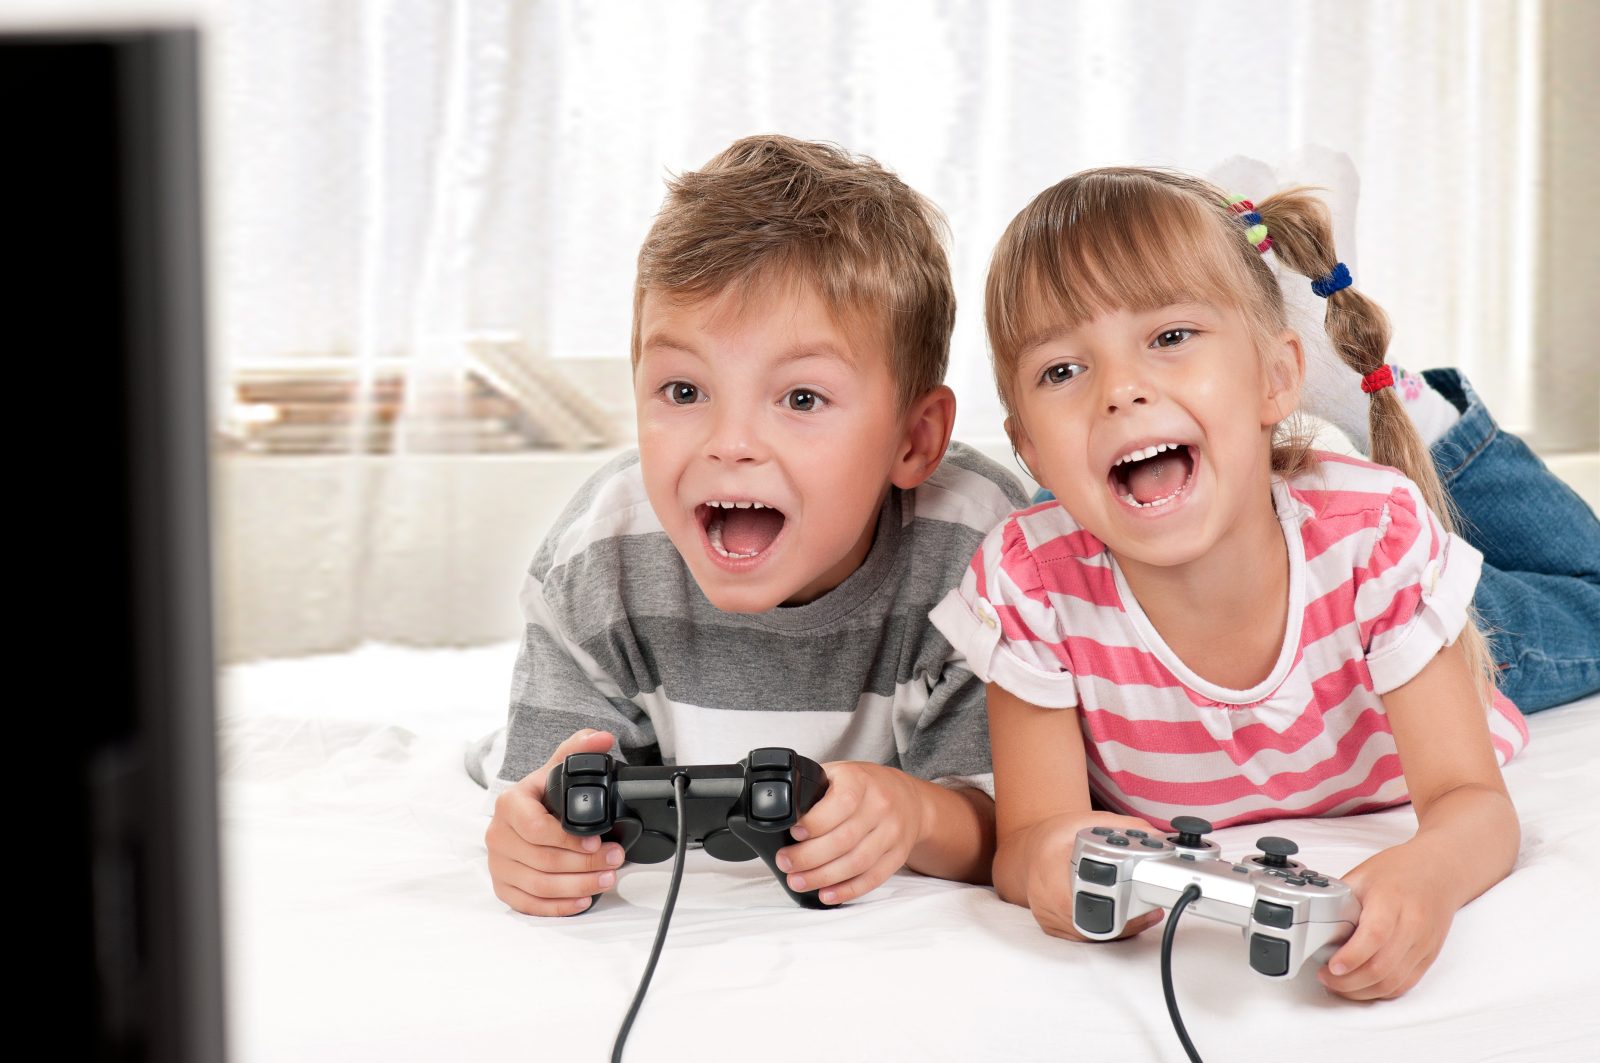 web3-children-playing-videogame-e1555398742806.jpg